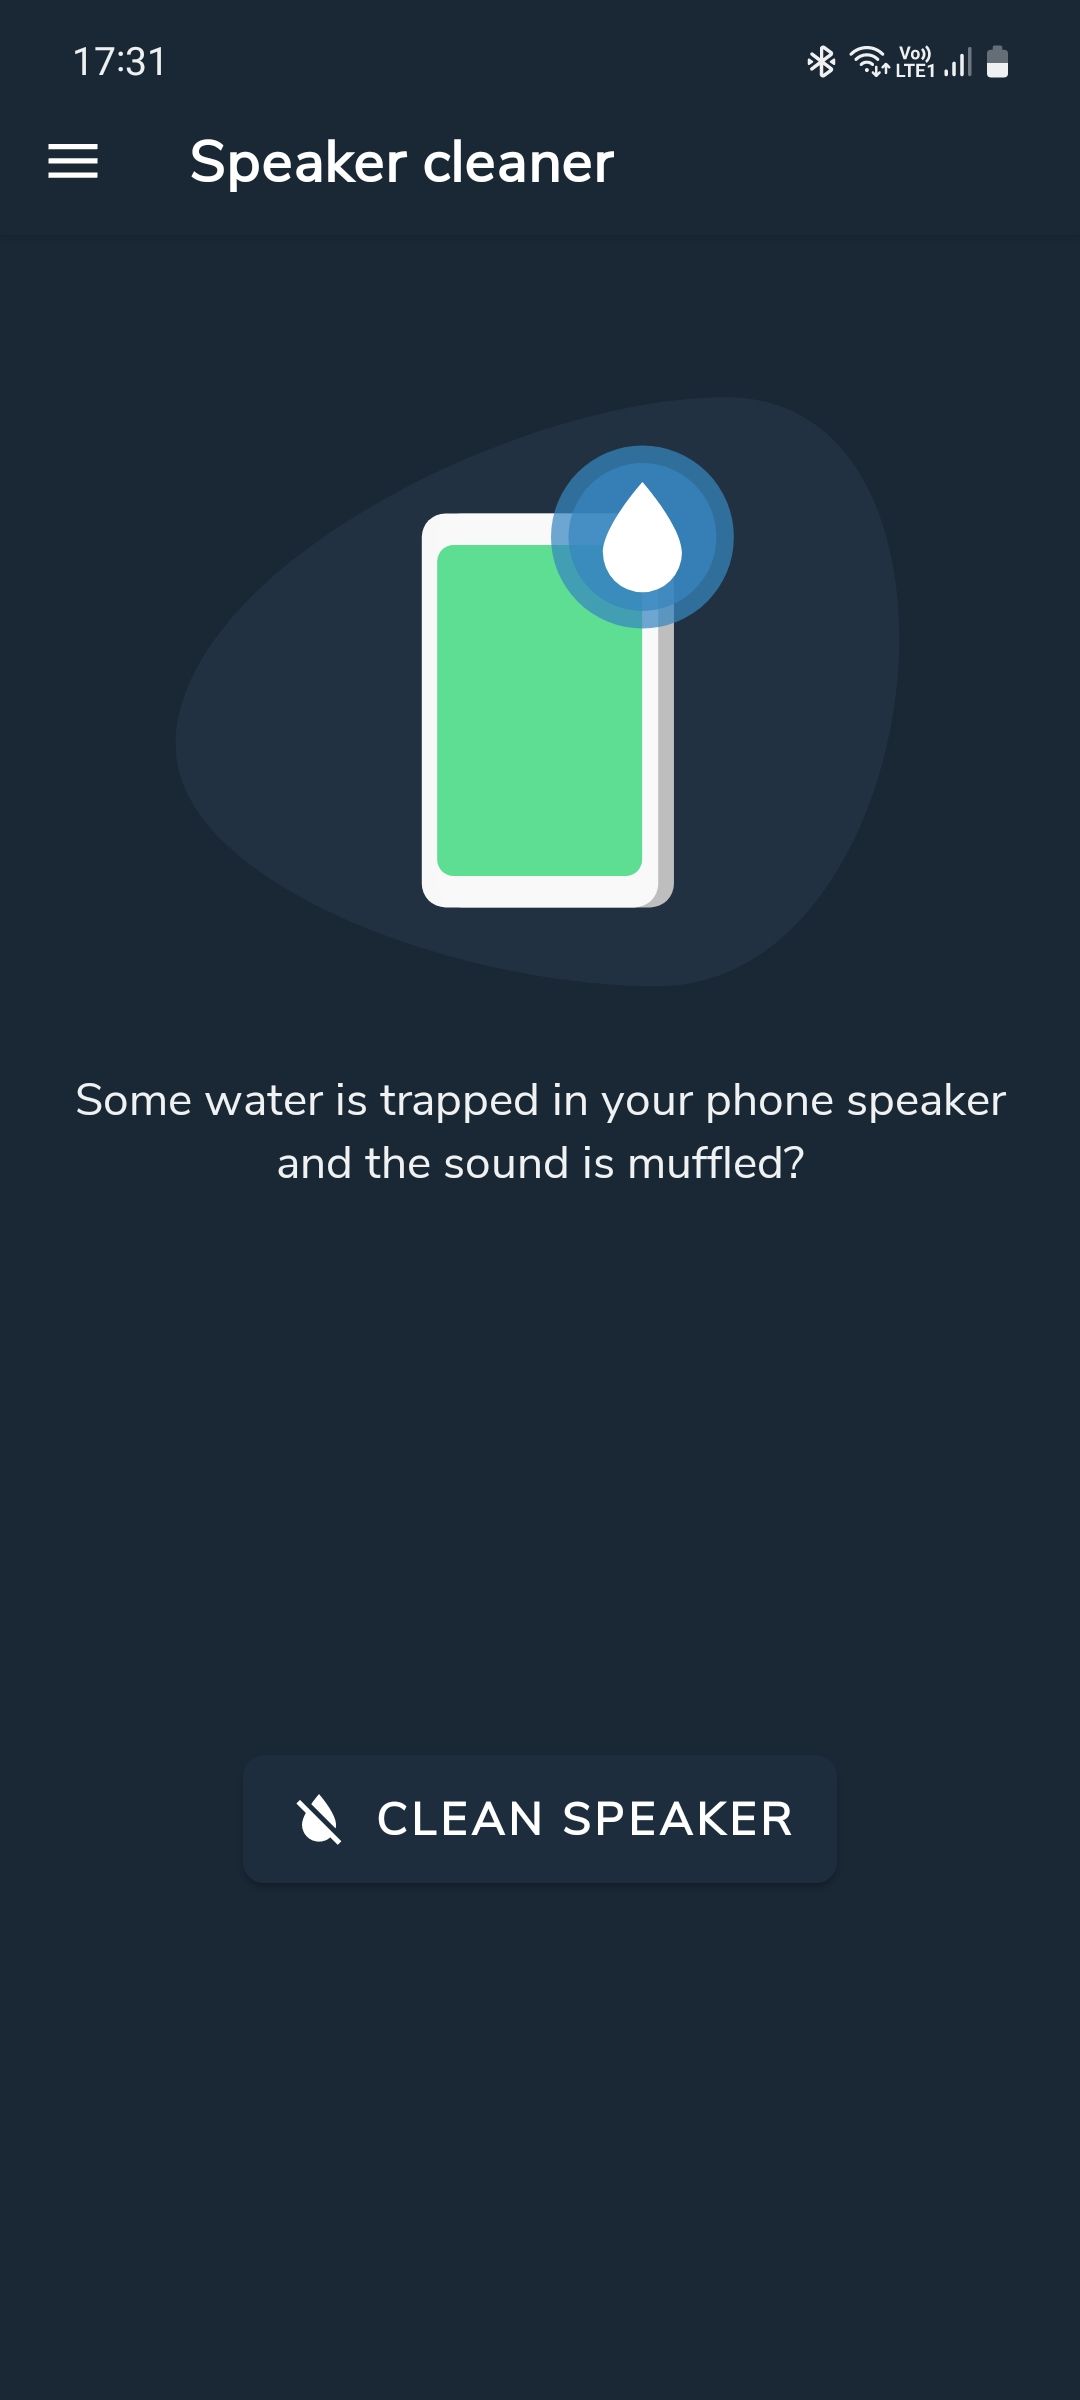 Speaker cleaner app main page